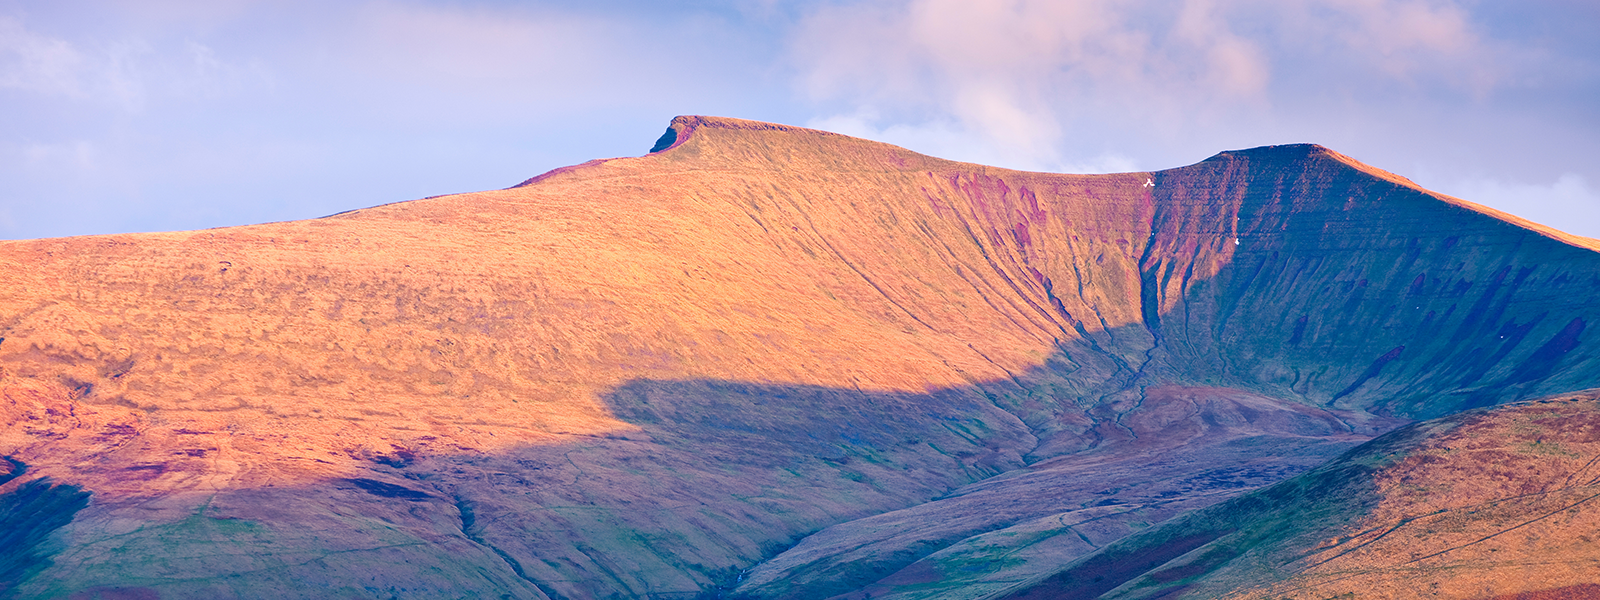 Welsh 3 Peaks - The Hidden Gems